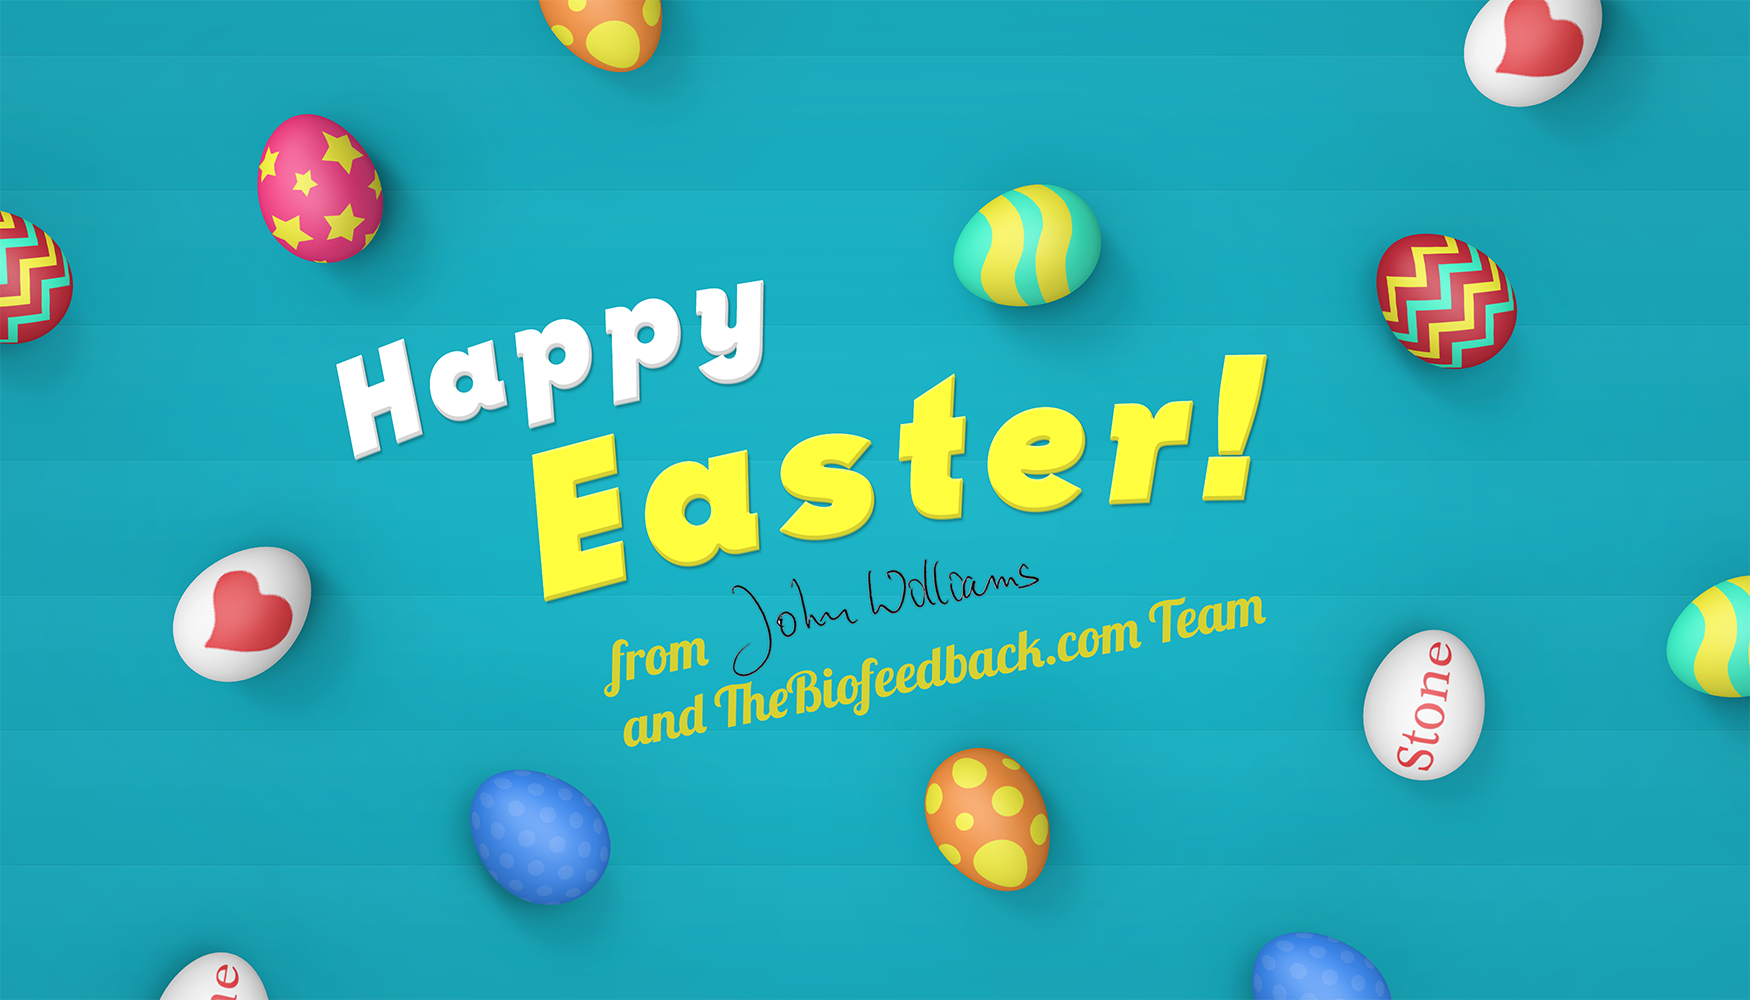 Happy Easter from TheBiofeedback.com!